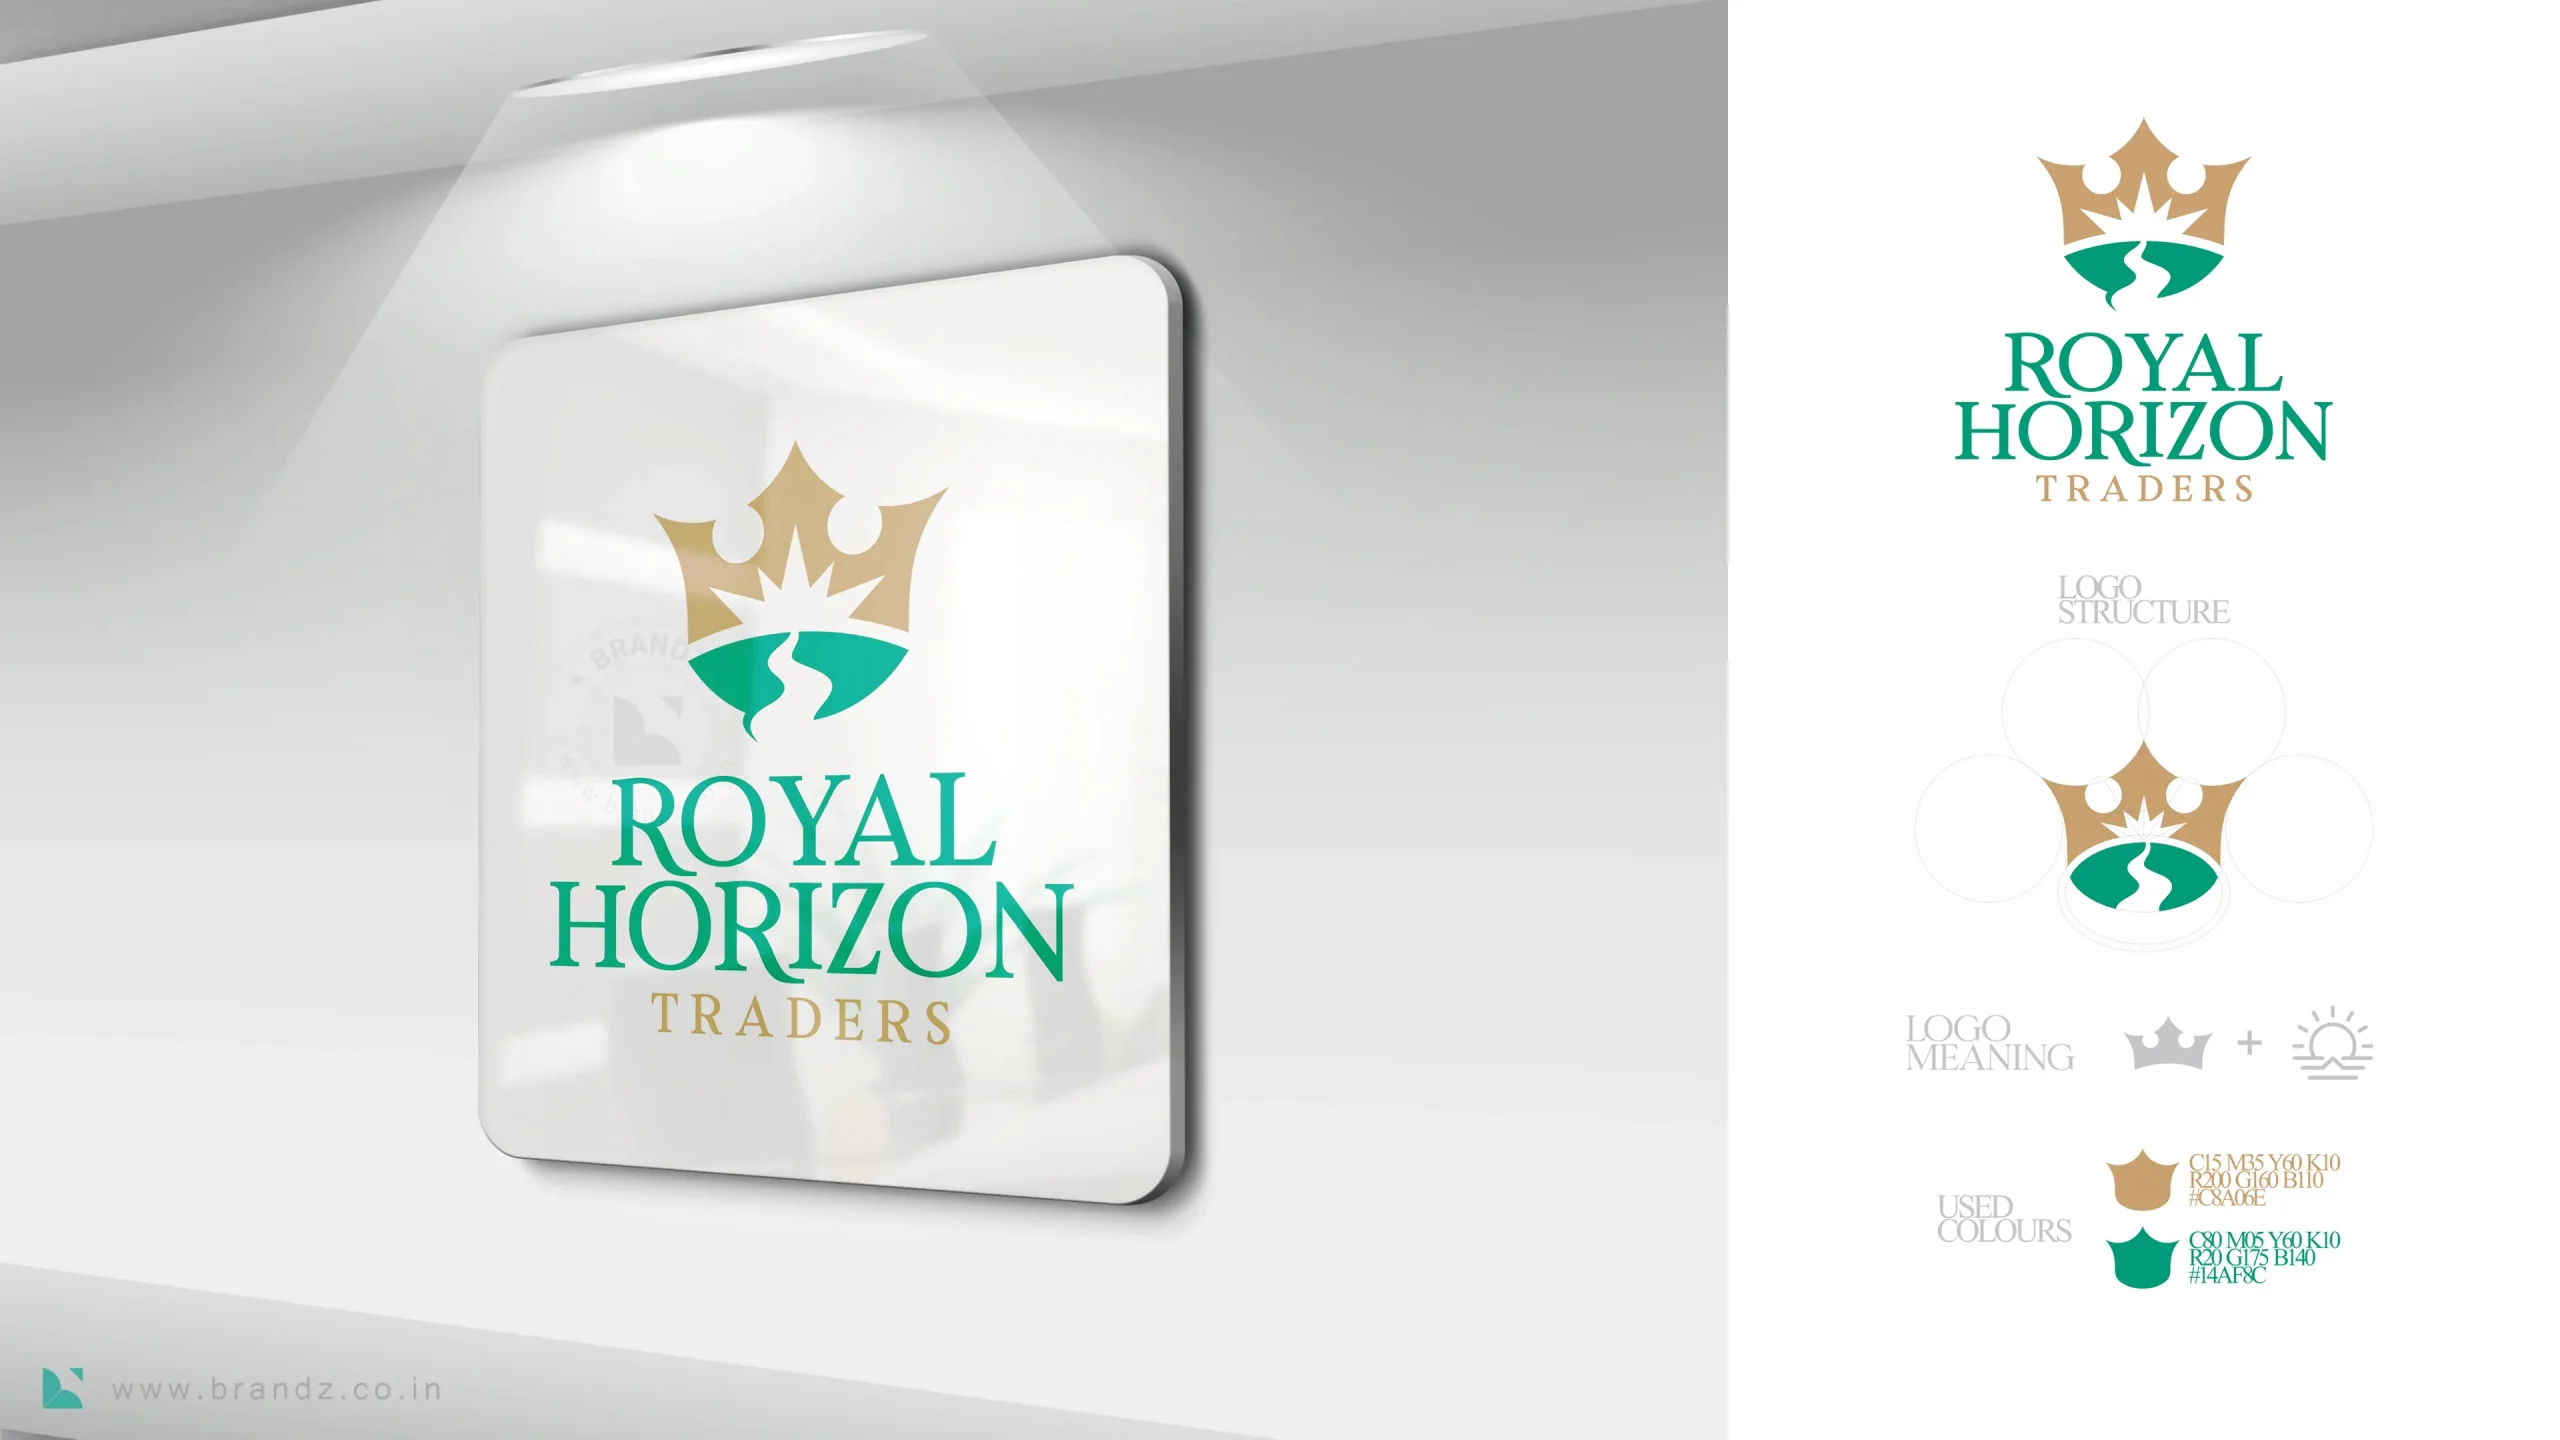 Royal Horizon Traders Company Logo